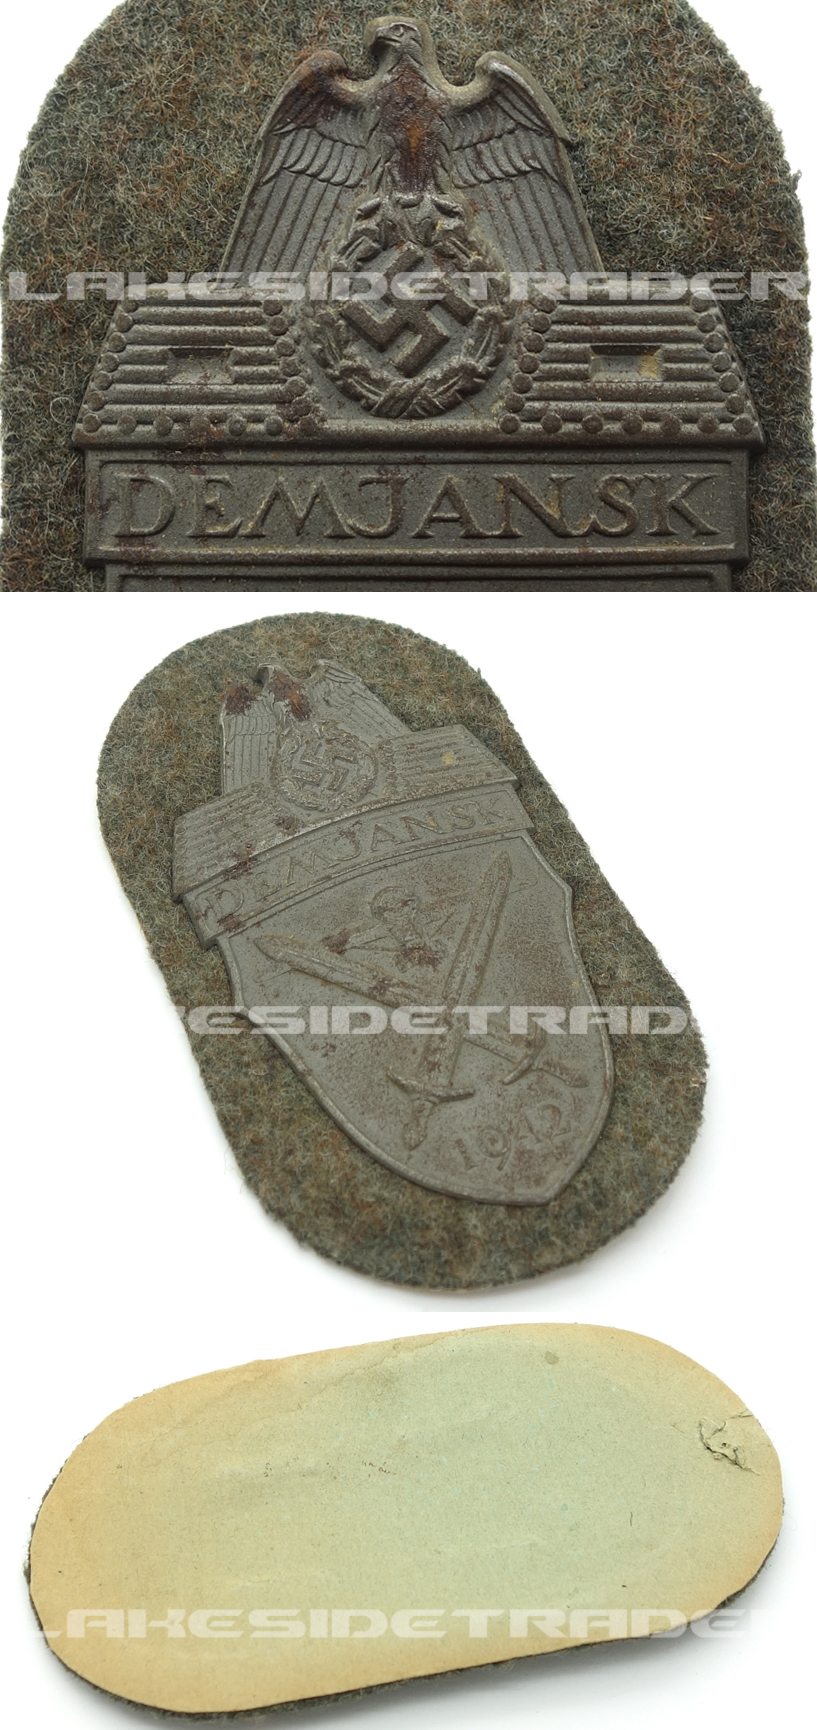 Army Demjansk Arm Shield